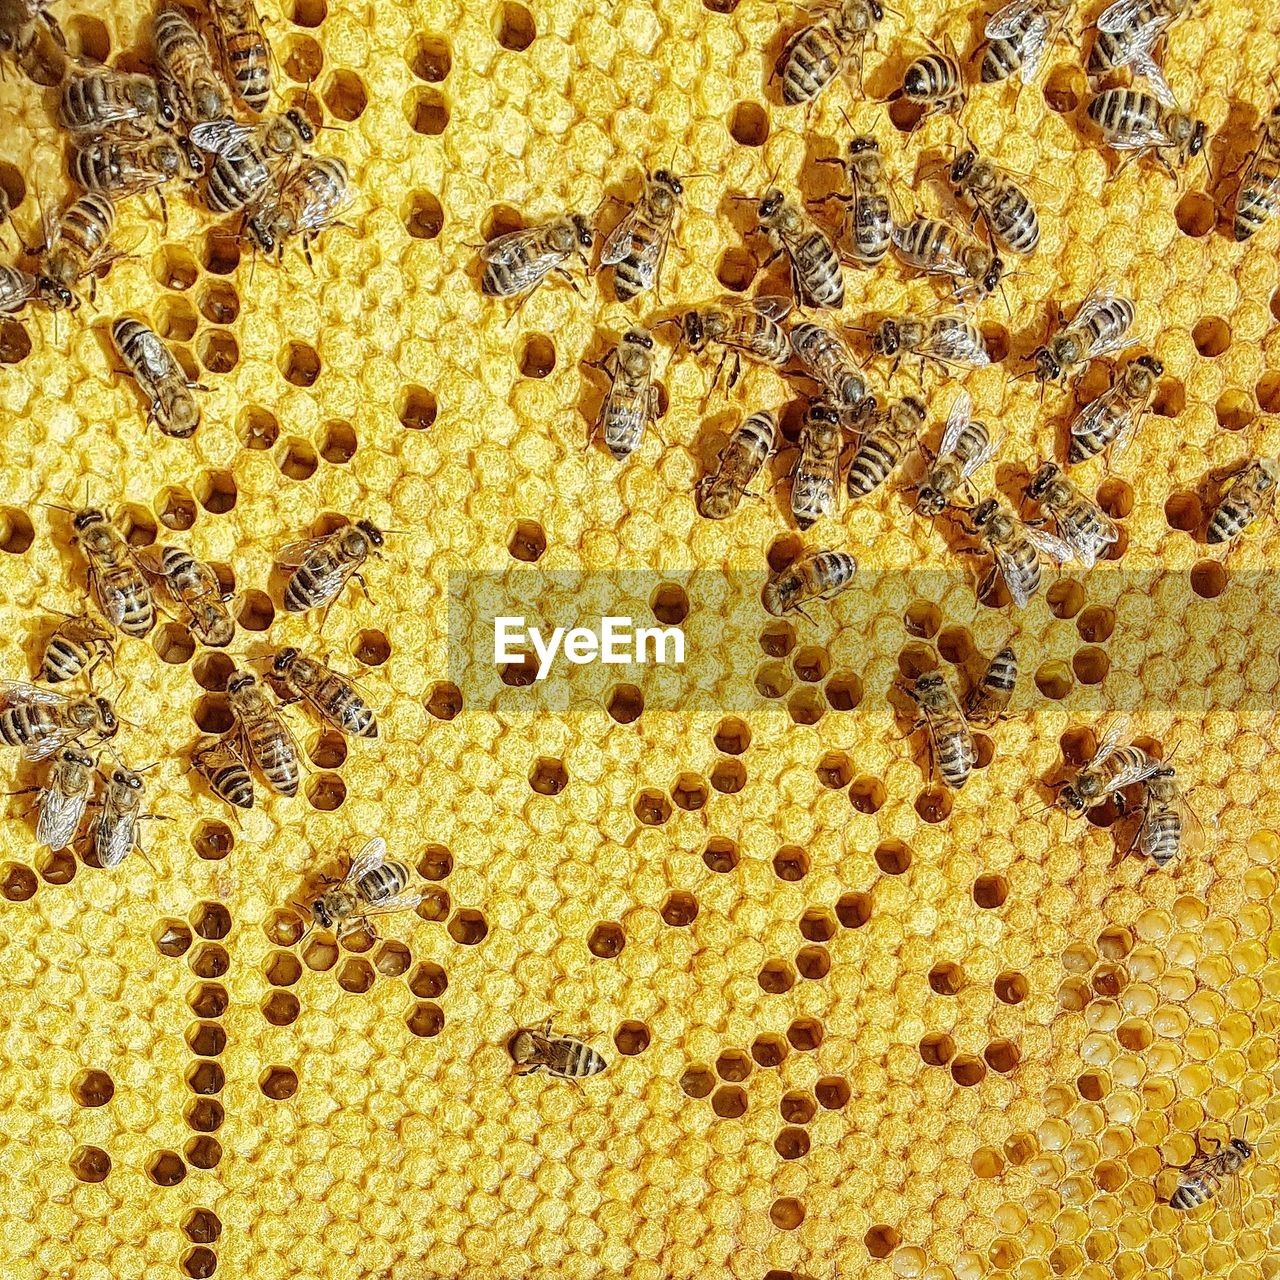 FULL FRAME SHOT OF BEE ON YELLOW POLLEN